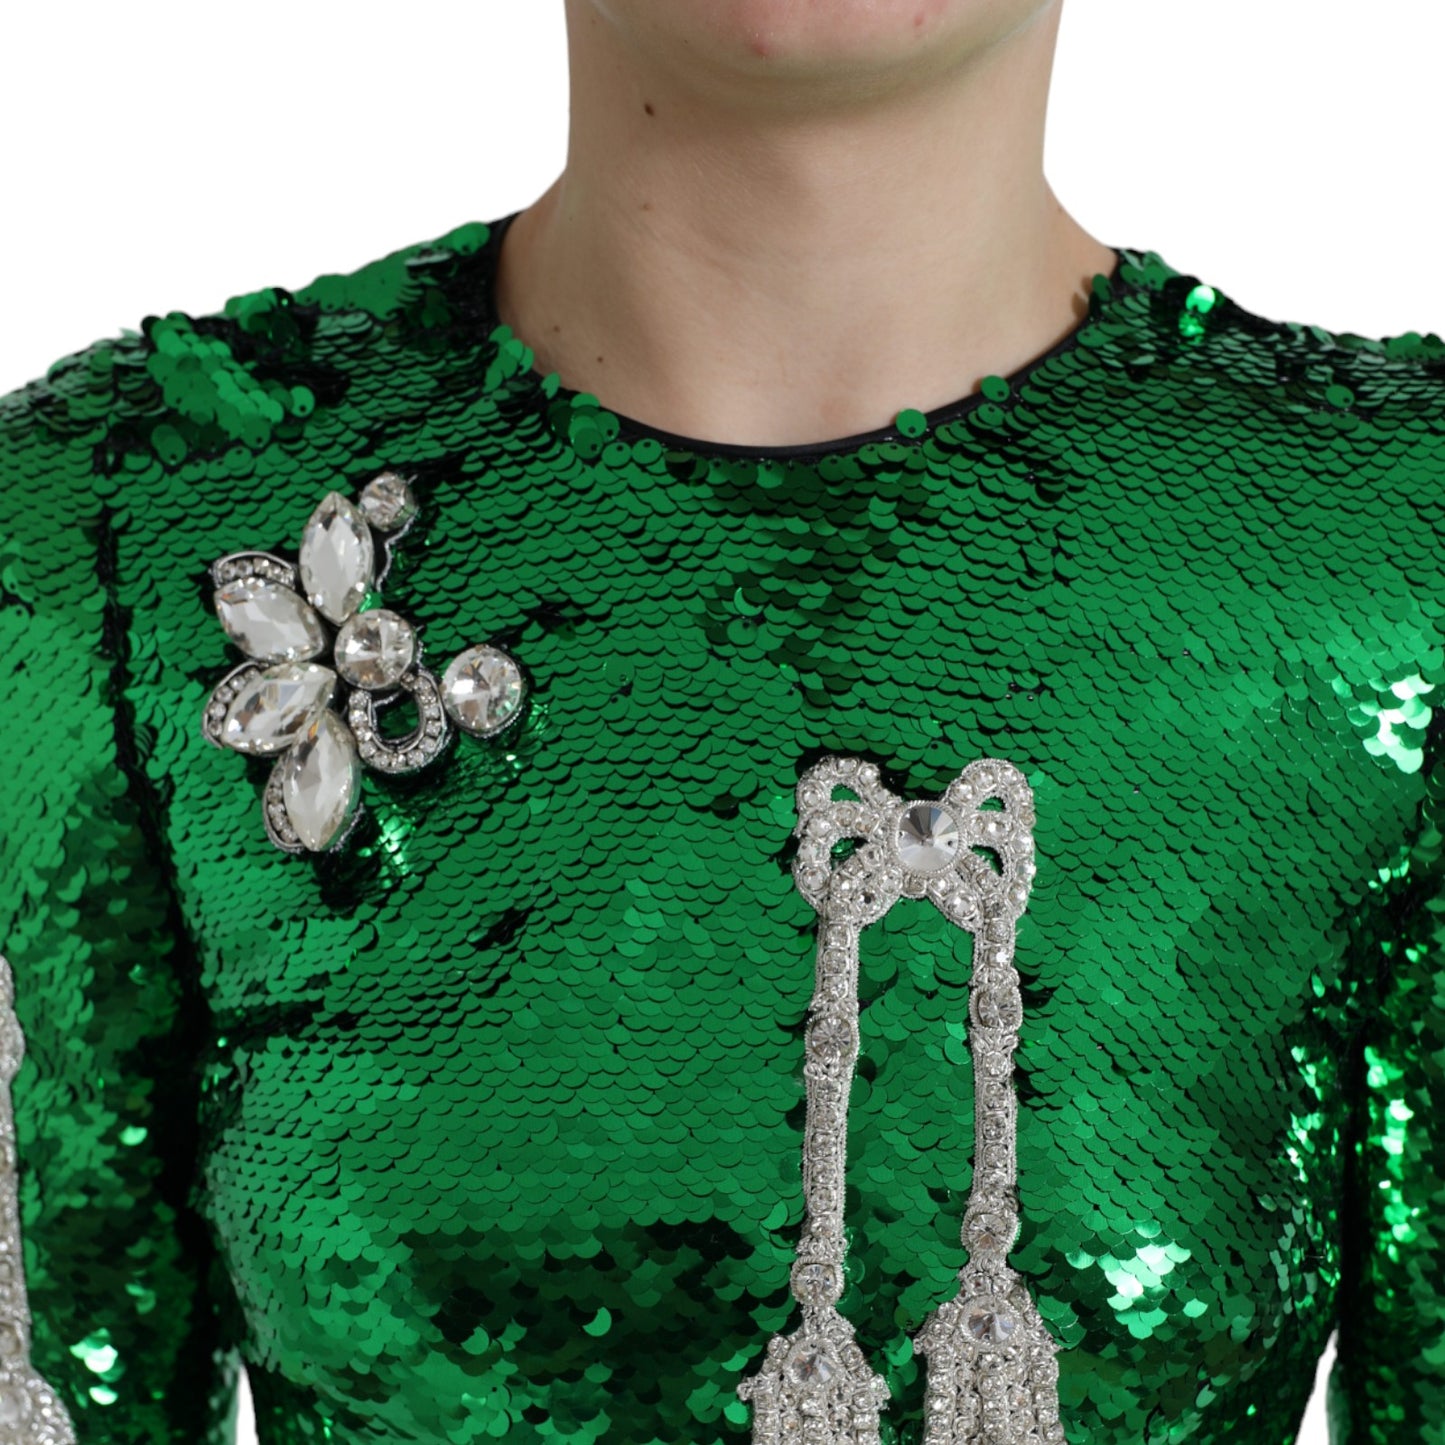 Elegant Below Knee Green Embroidered Dress